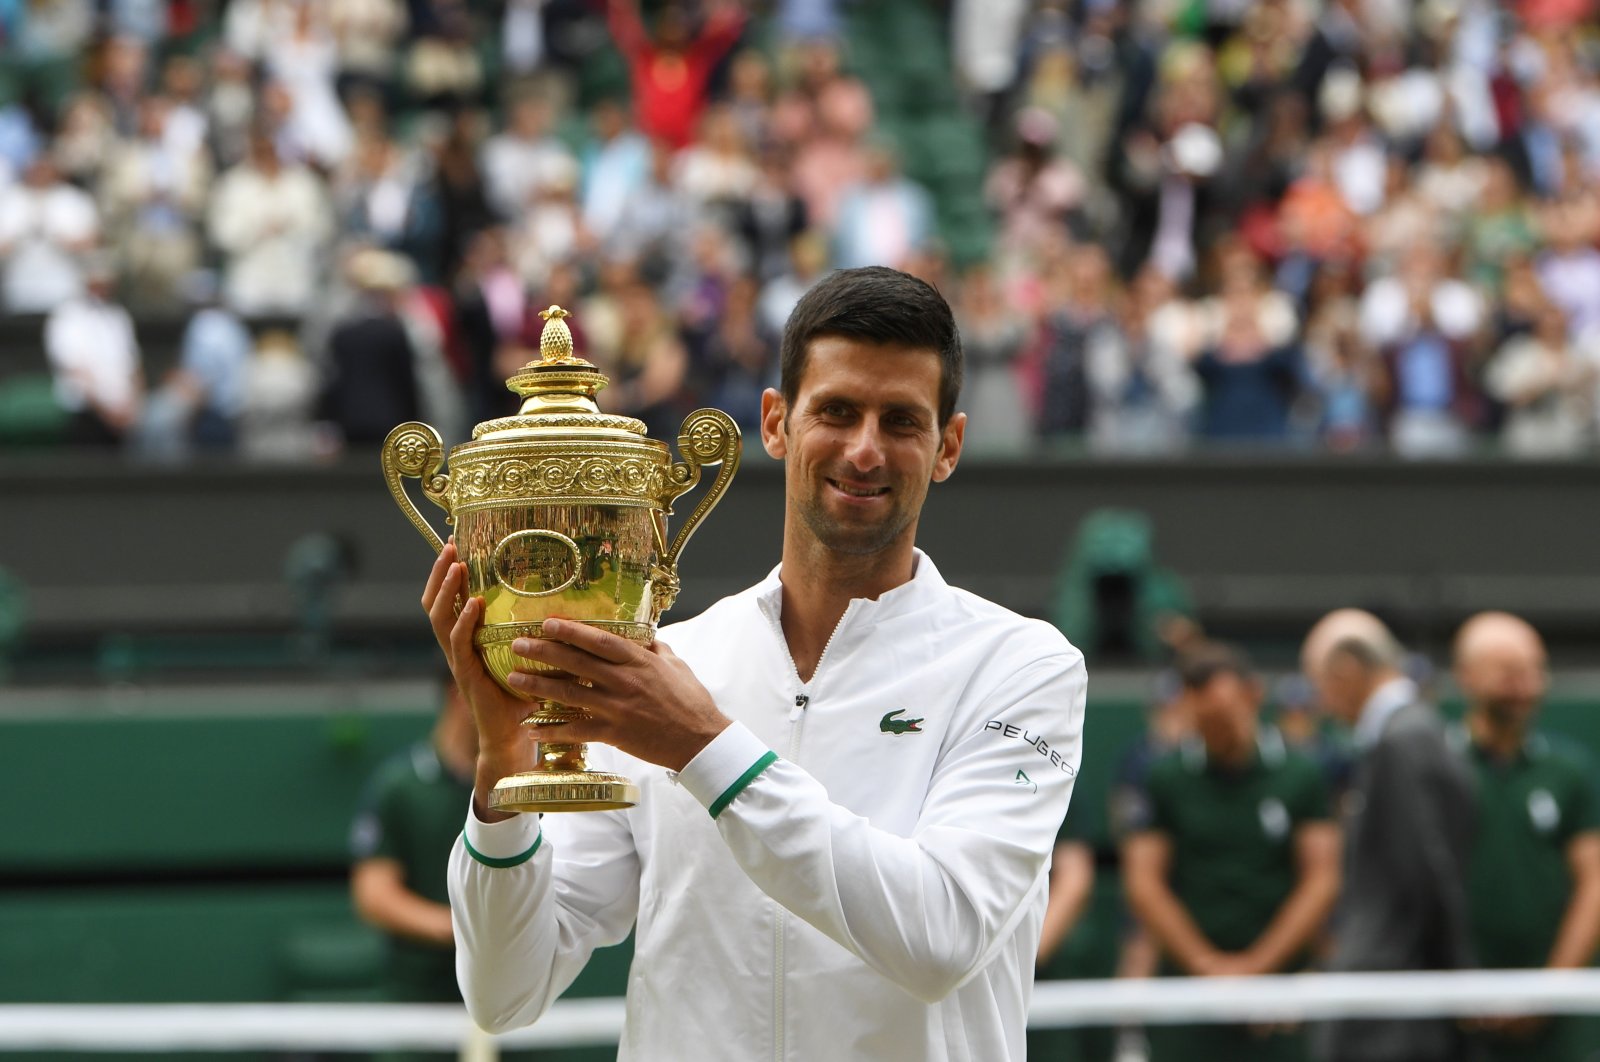 Serbia's Novak Djokovic with the trophy after winning the Wimbledon men's singles title, London, England, July 11, 2021.